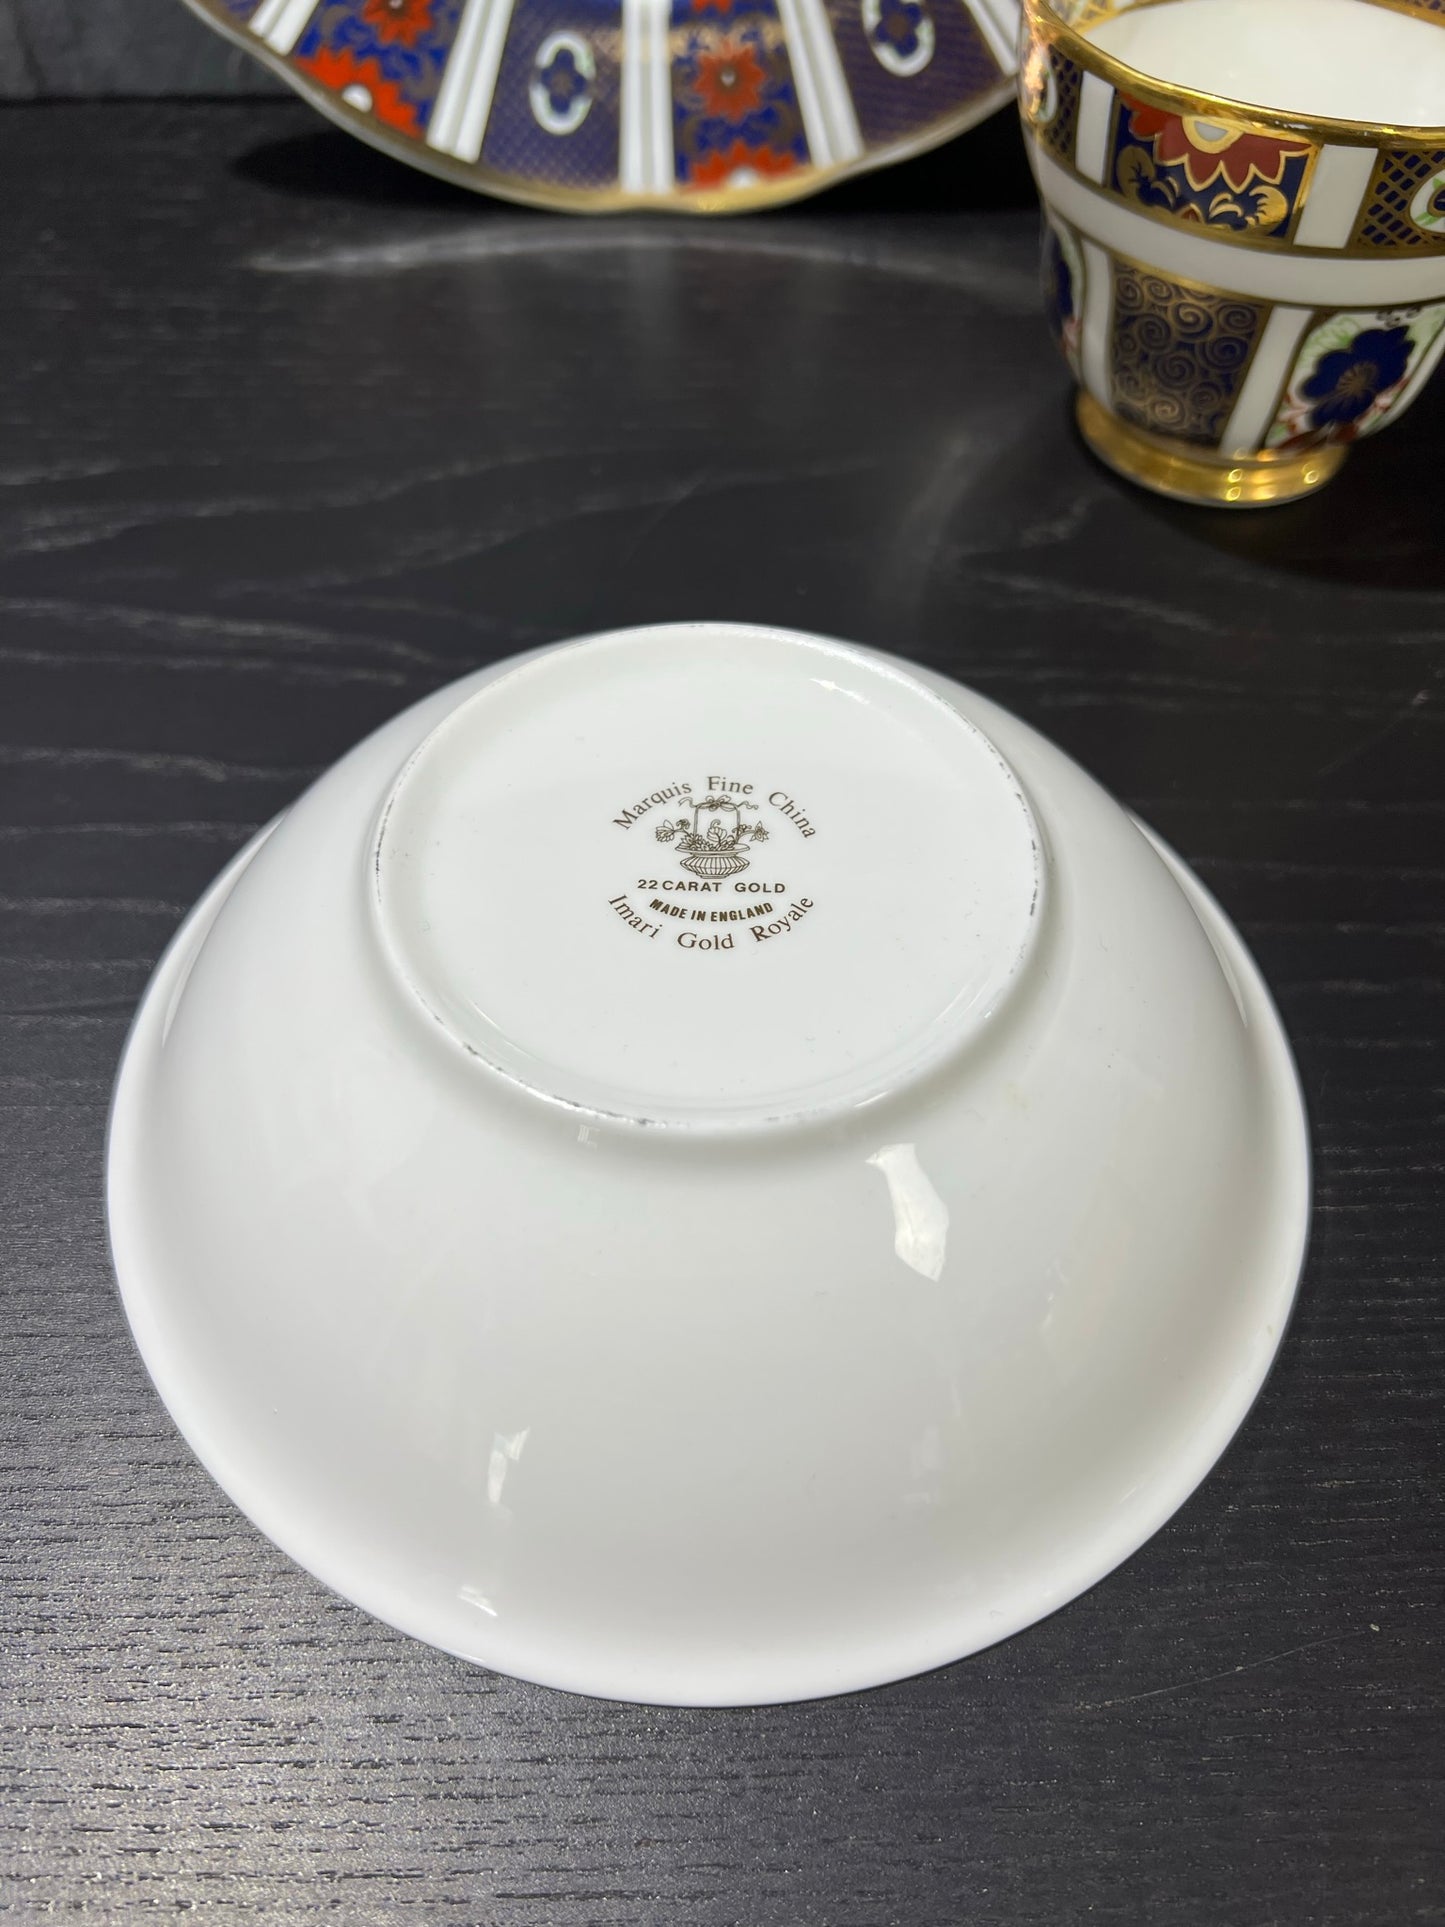 Vintage Marquis Fine China 22 Carat Gold 3 Piece Set Cup Plate & Bowl Imari Gold Royale